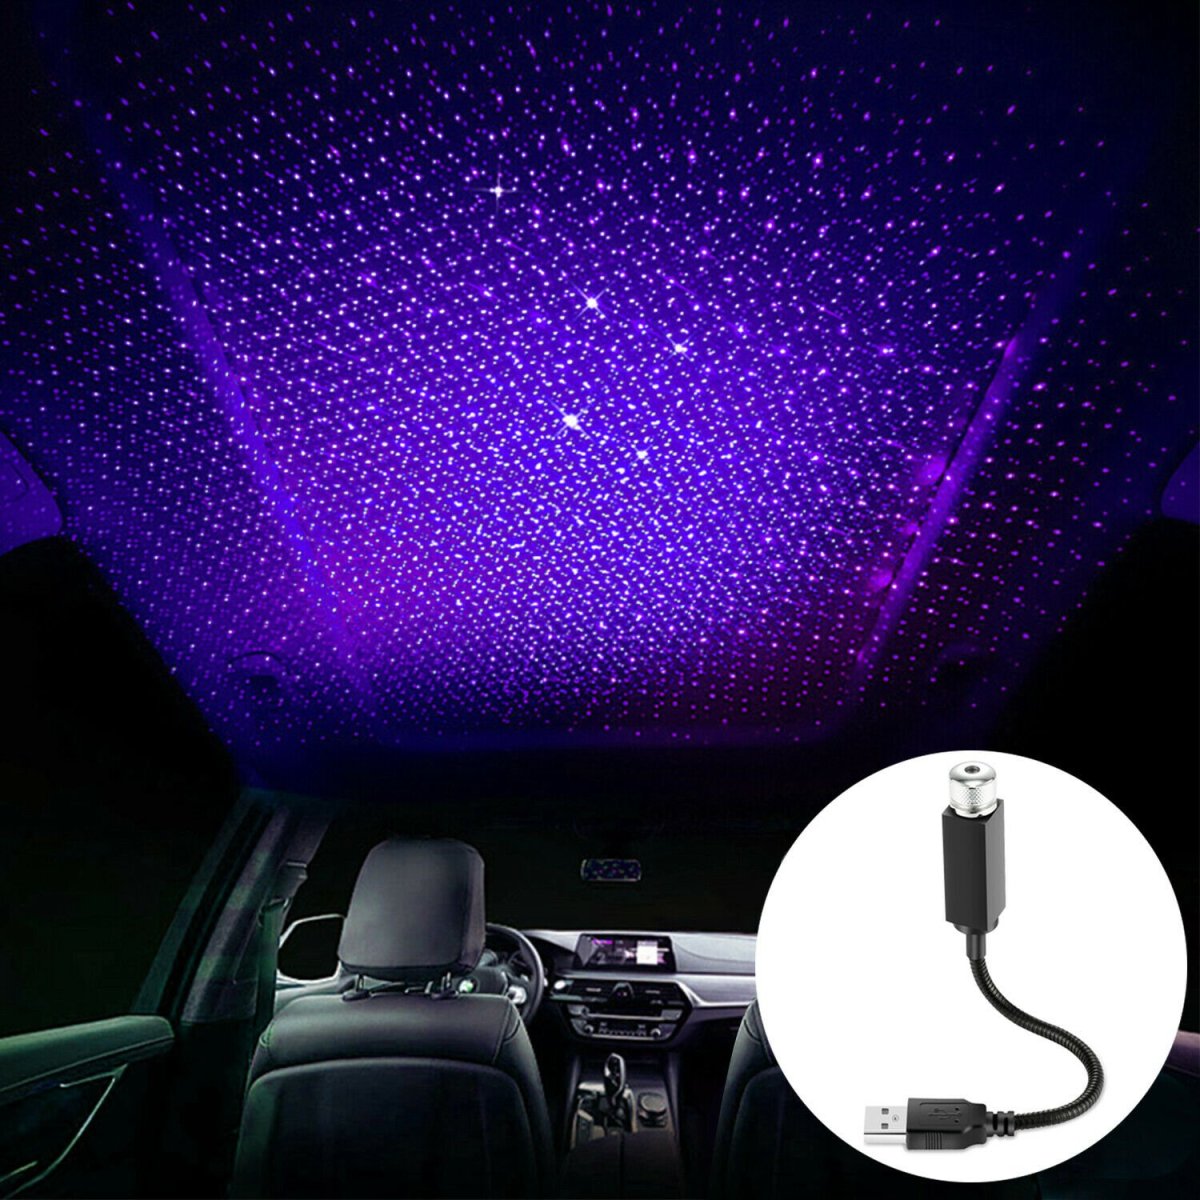 USB car Roof Star Projector Light led Interior Lamp, Romantic decoration Star Lights Night atmosphere Light